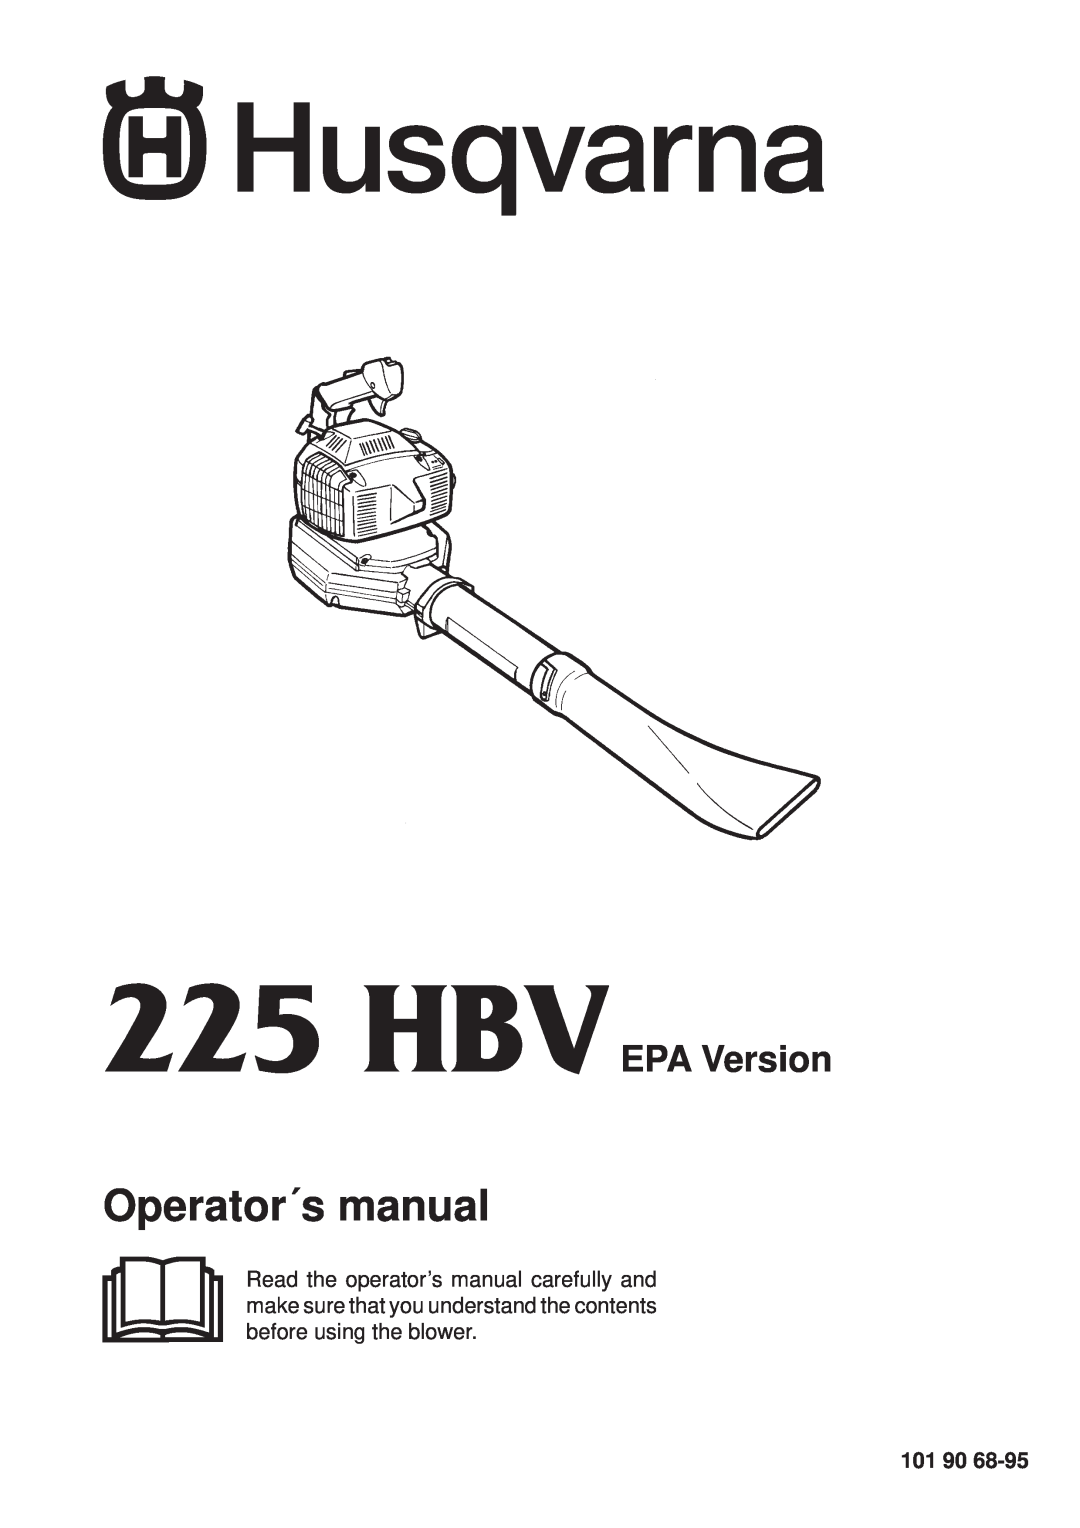 Husqvarna 225 HBV manual Operator´s manual, 225HBVEPA Version 